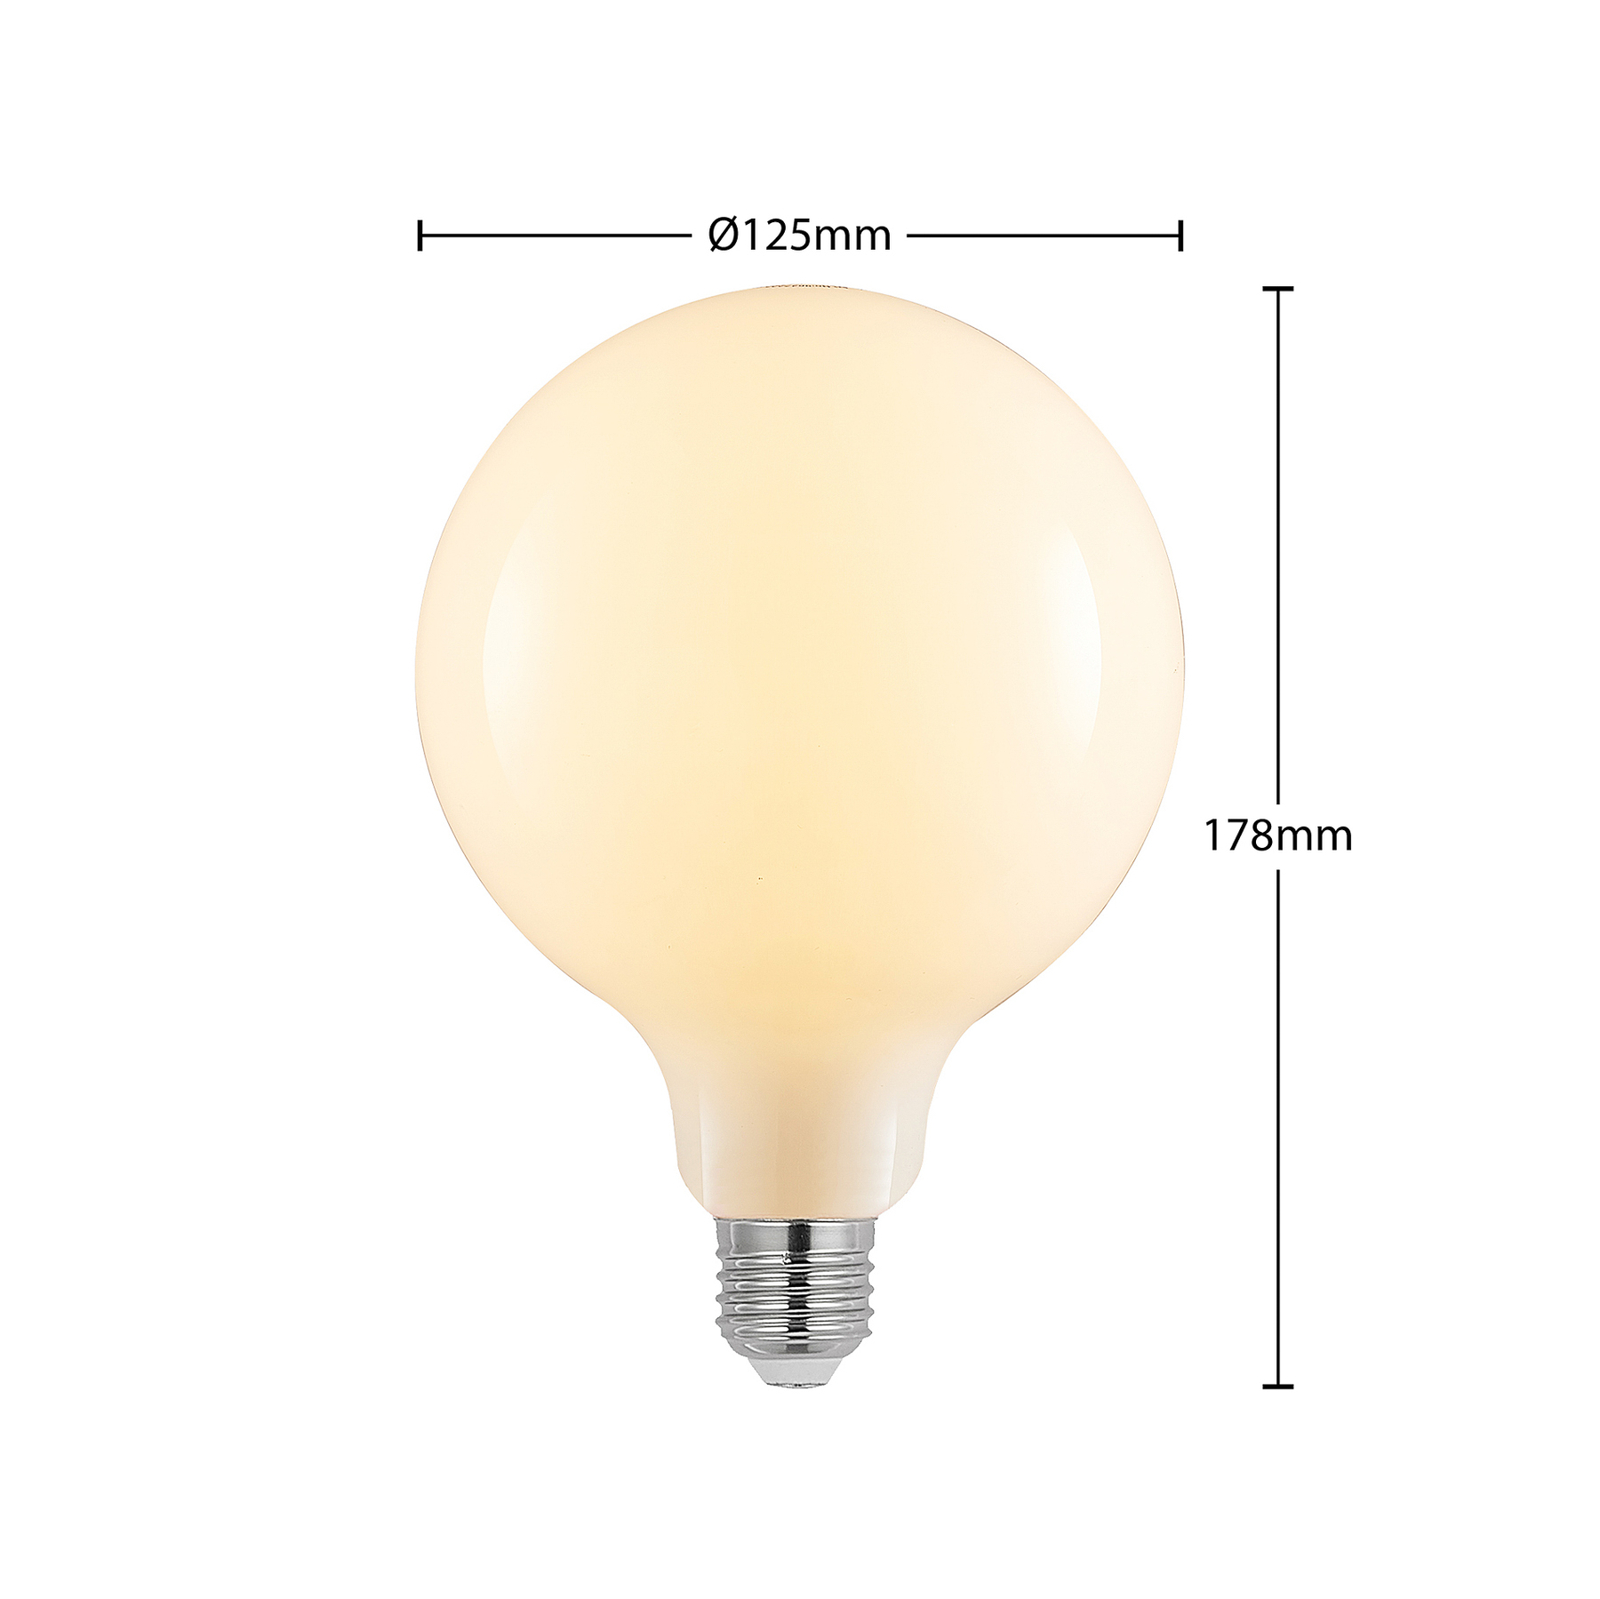 Lampada LED E27 6W 2,700K G125 regulável opala conjunto de 2